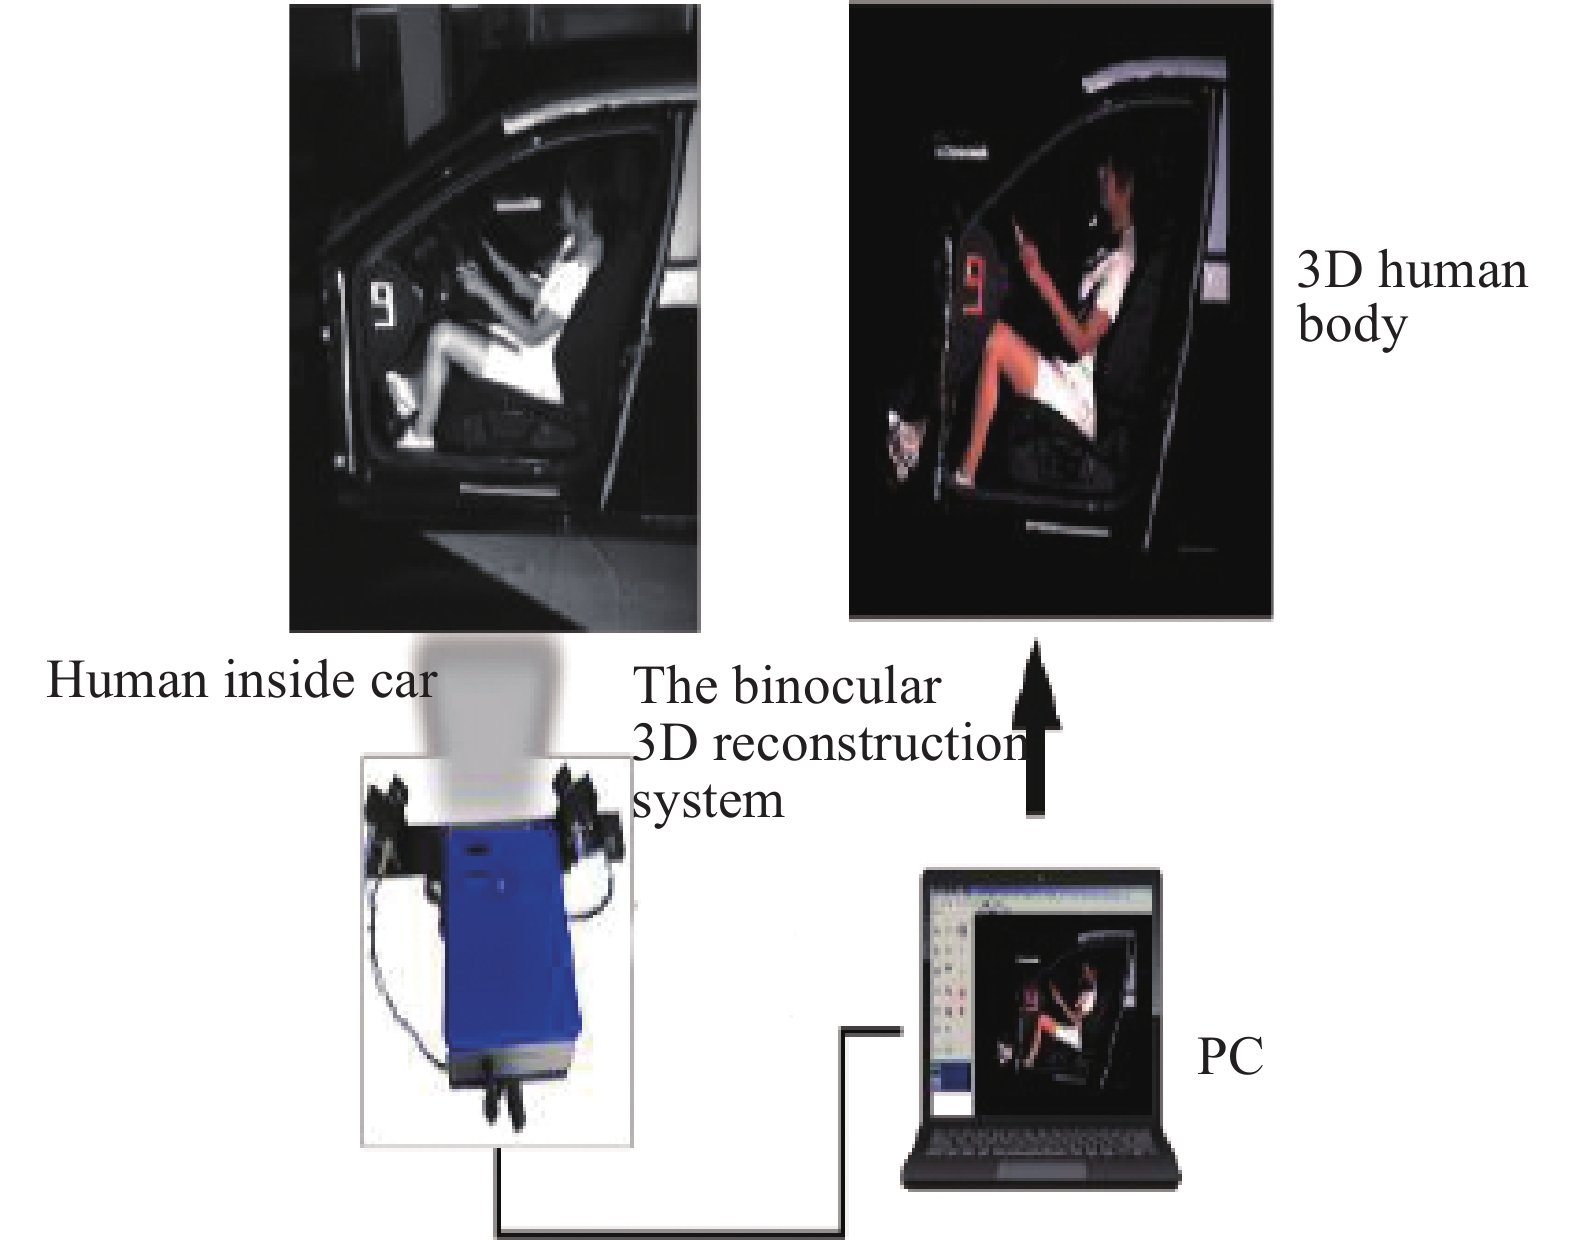 Binocular 3D human body scanning system